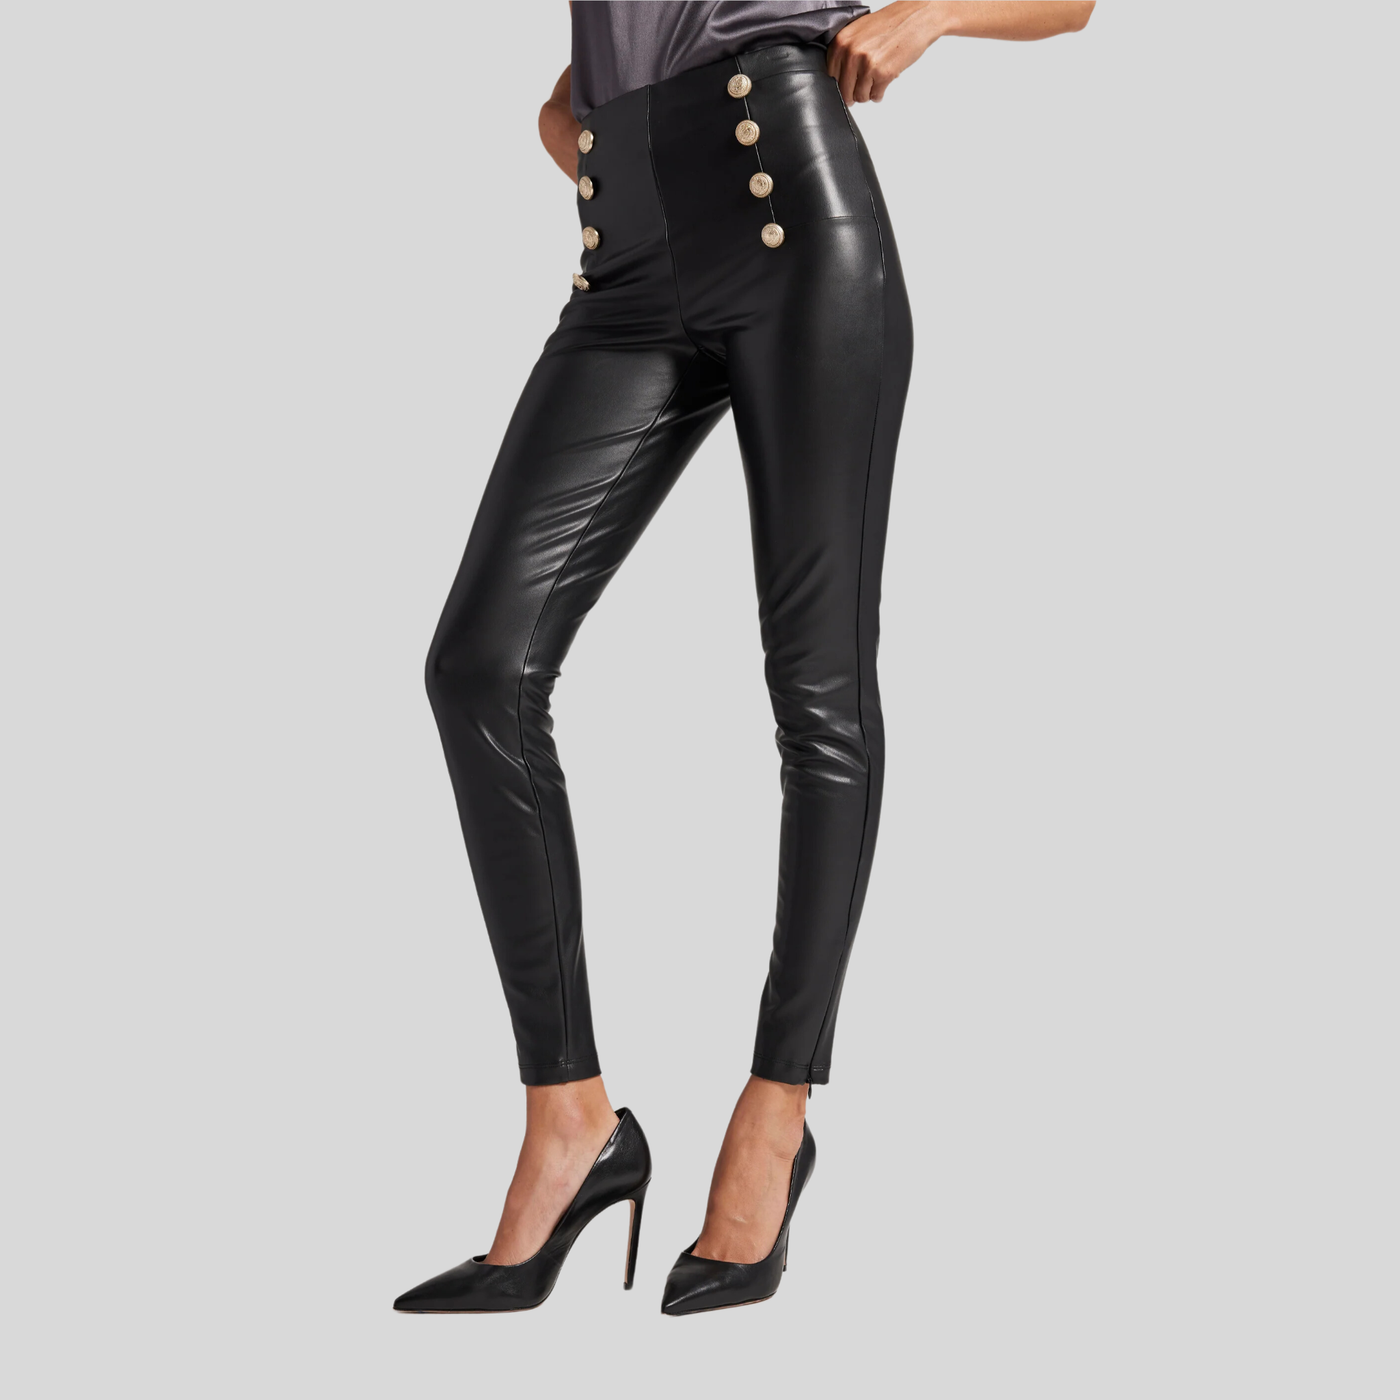 Gotstyle Fashion - Generation Love Pants Vegan Leather Leggings - Black